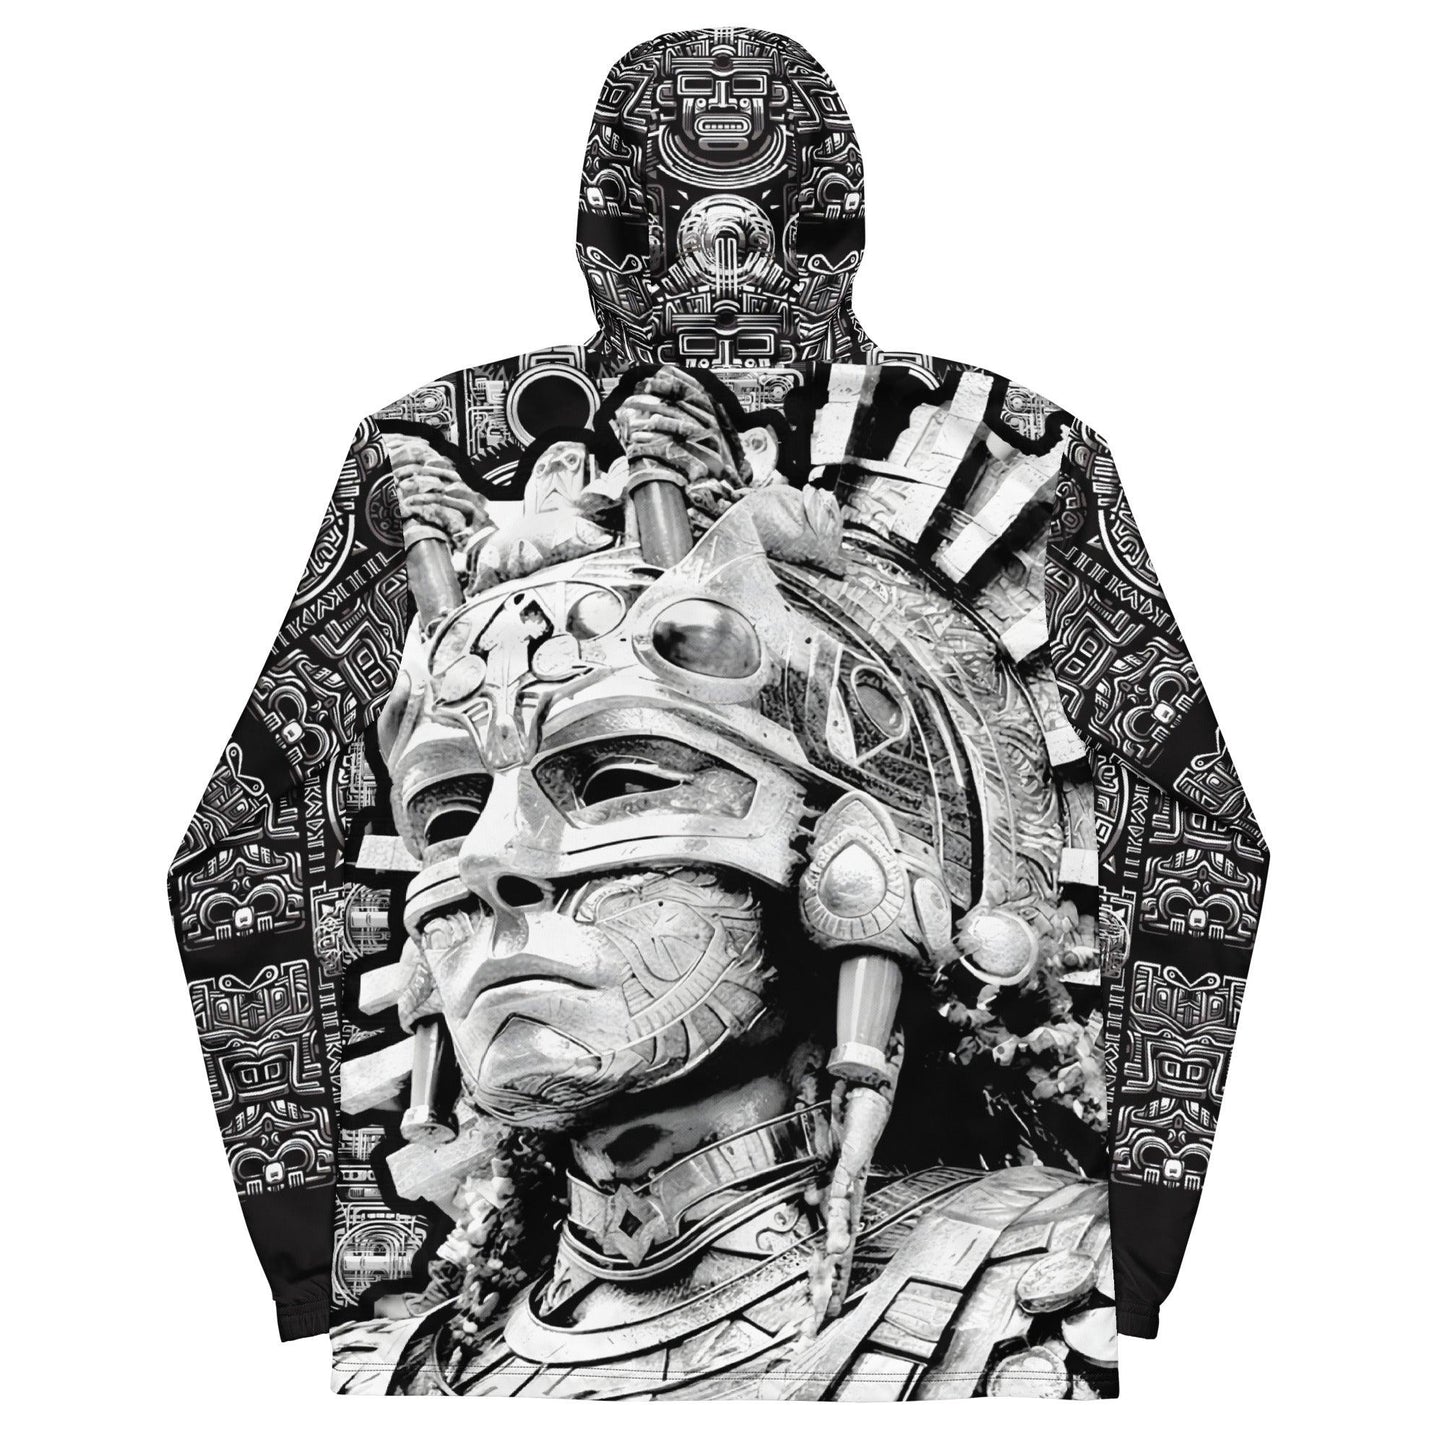 Mayan / Aztec Warrior All Over Print Unisex Windbreaker with Zippered Pockets by Metz Zen v1.0 - Alchemystics.org